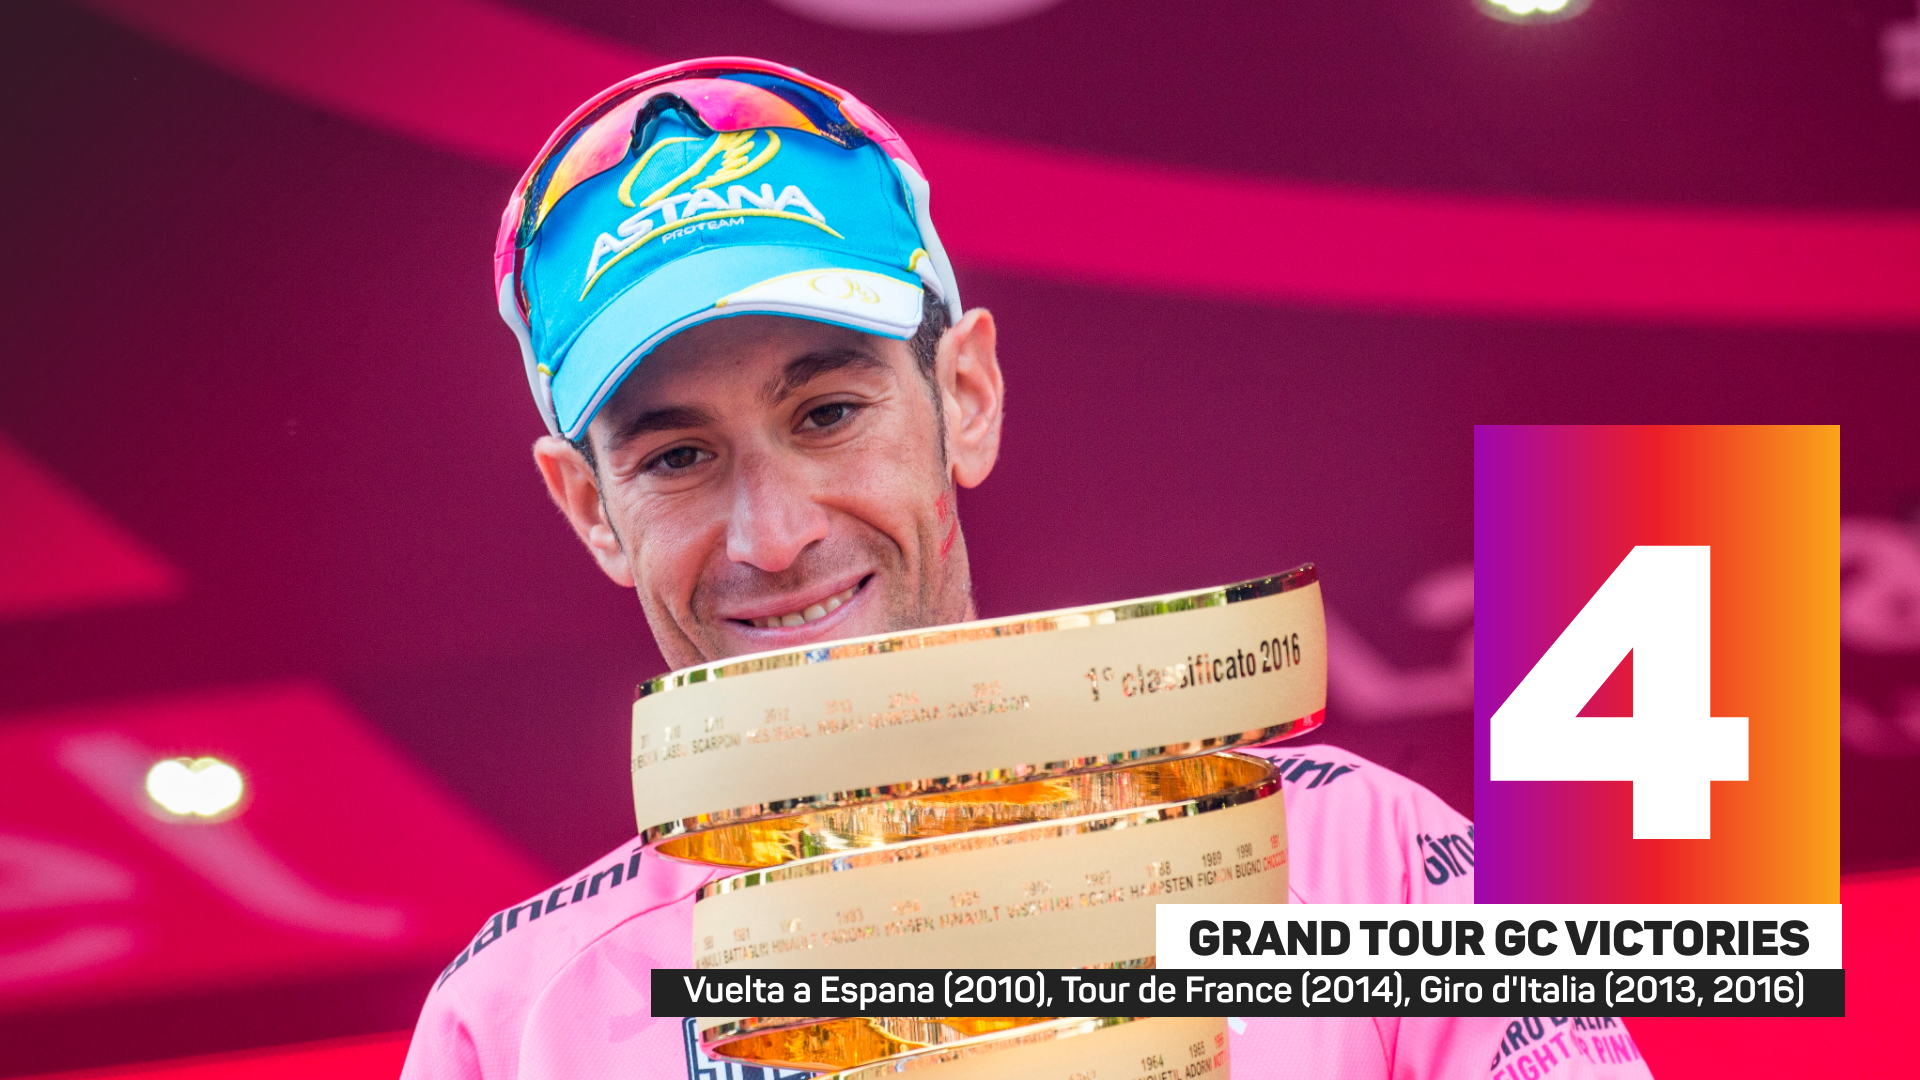 Vincenzo Nibali has won four Grand Tours